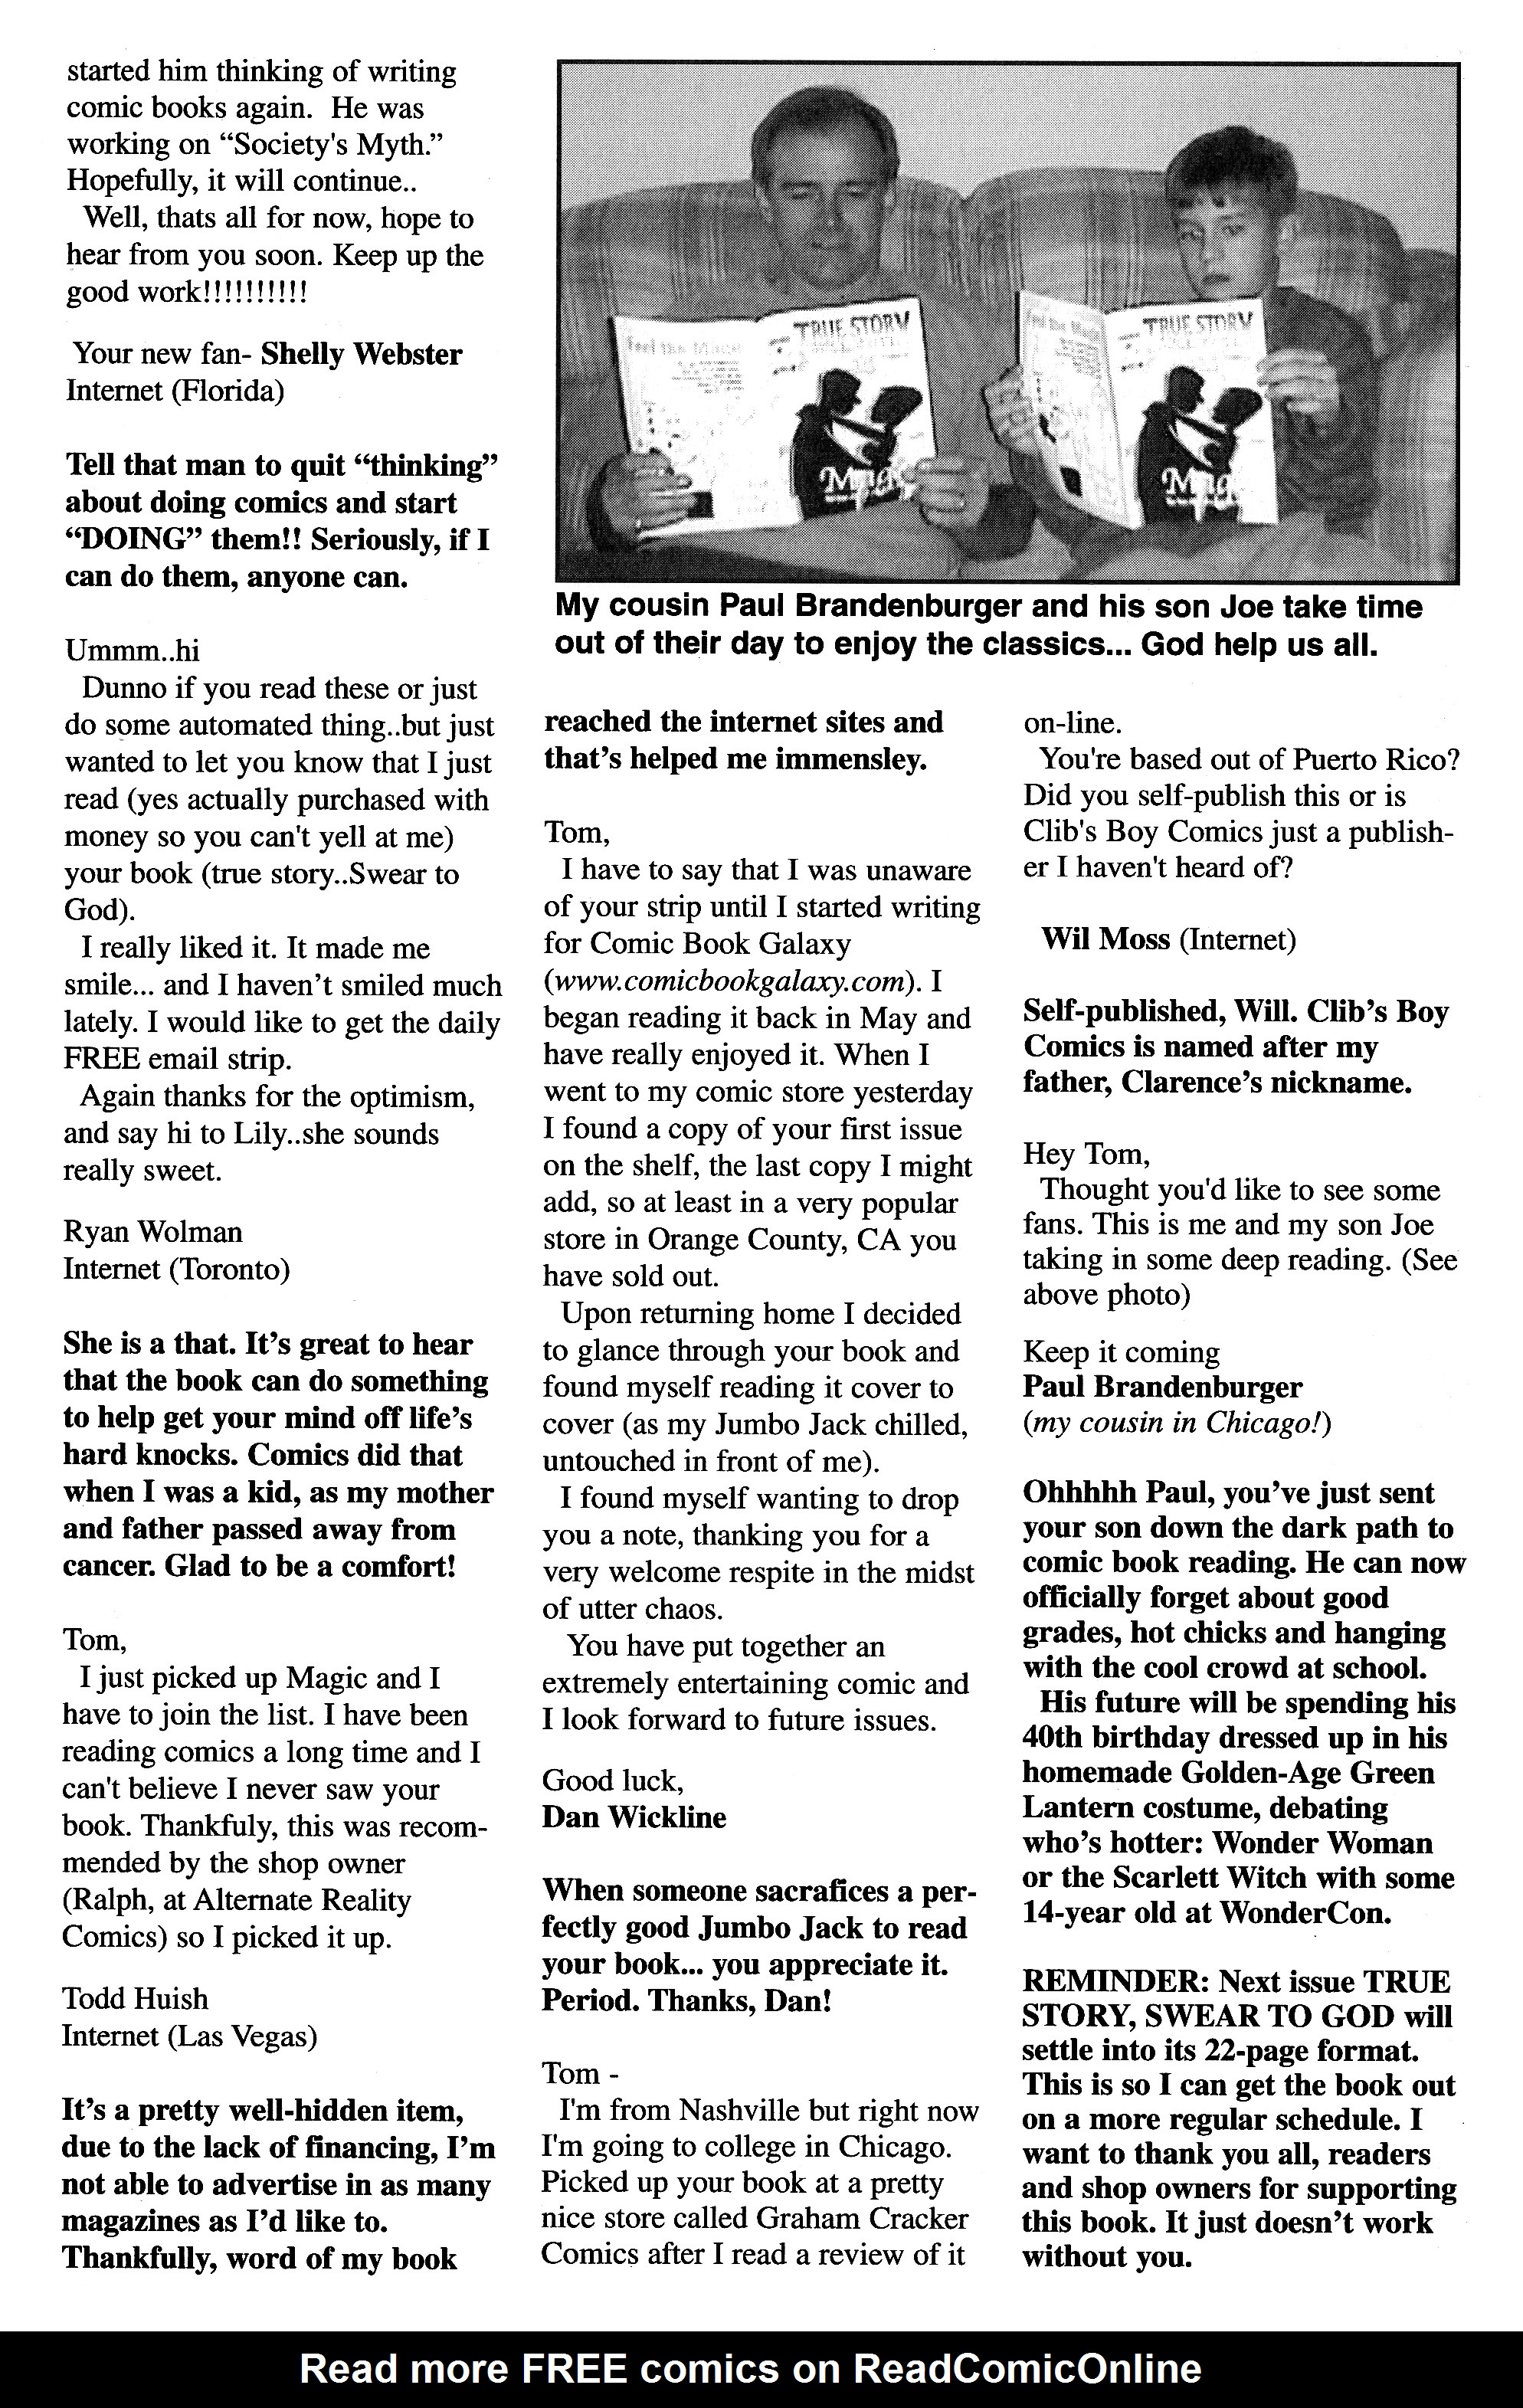 Read online True Story Swear To God (2000) comic -  Issue #2 - 42